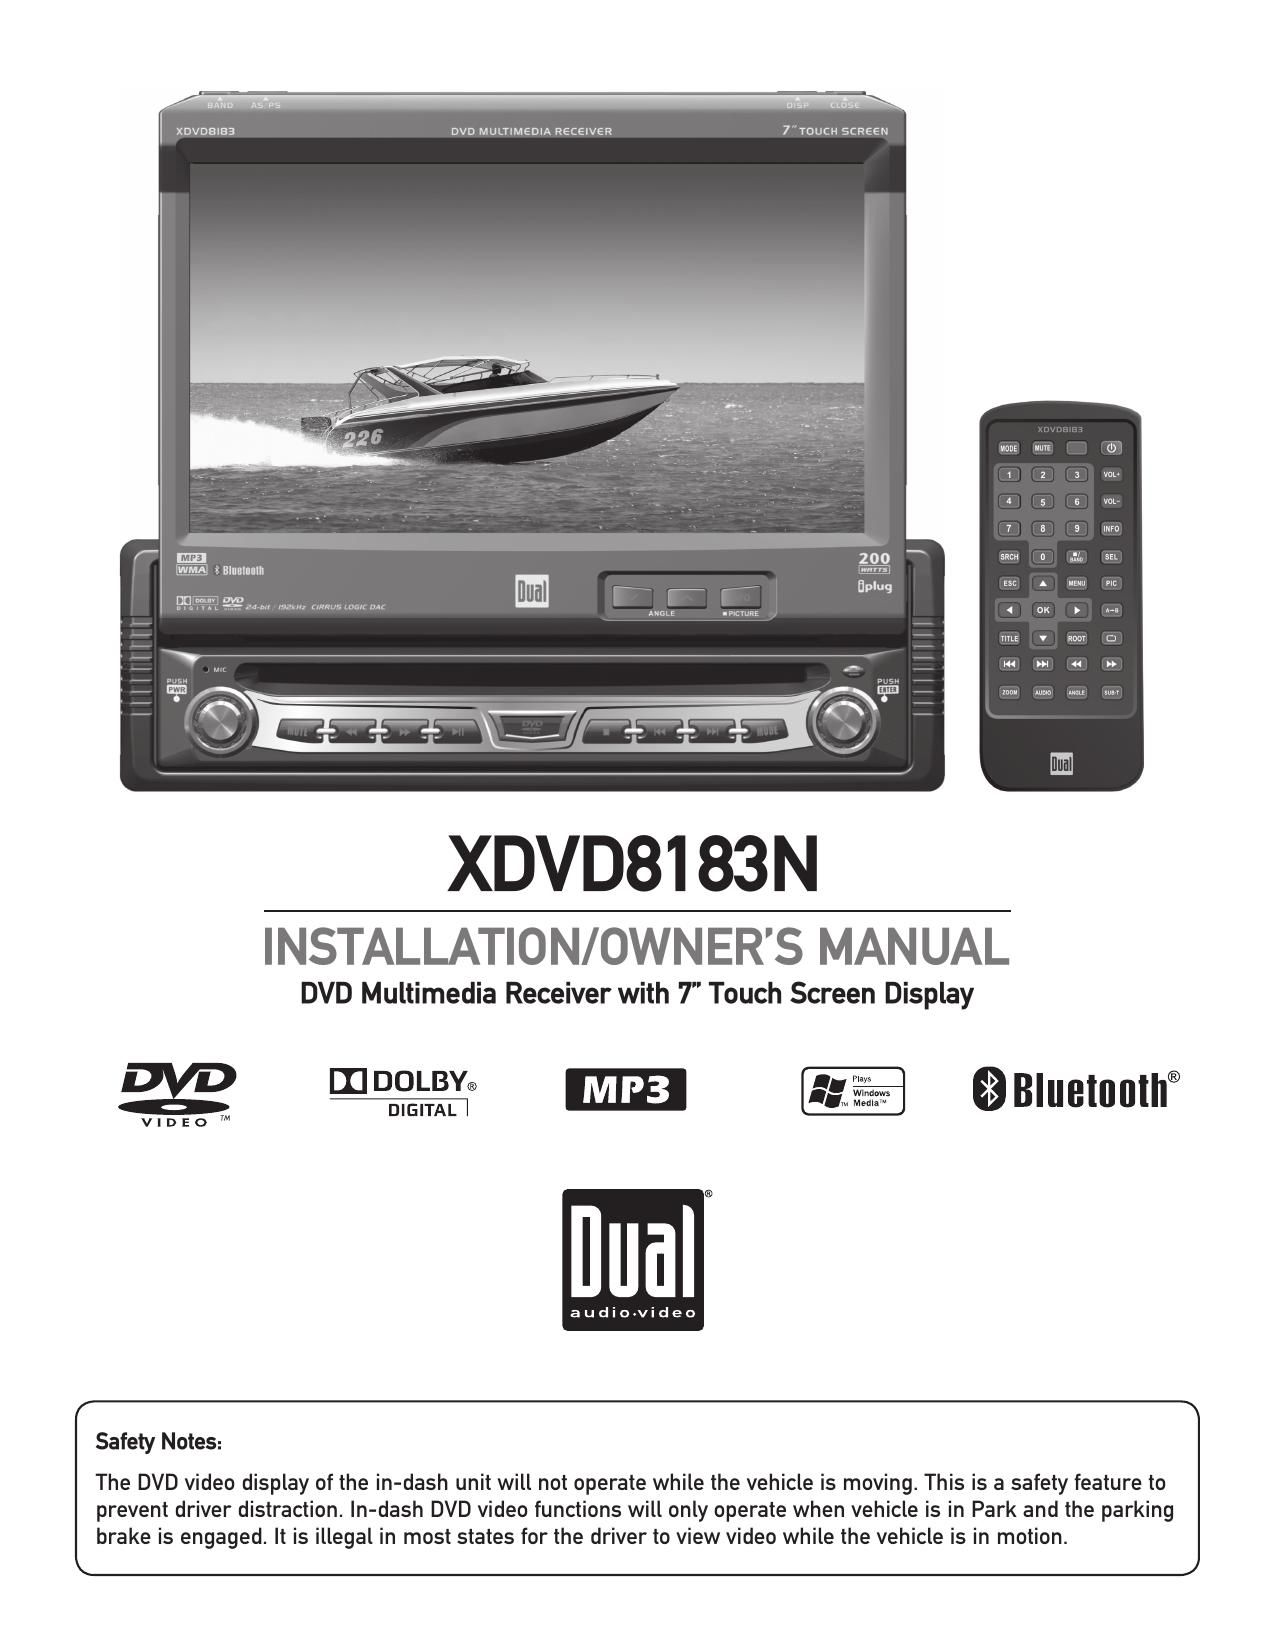 Dual XDVD 8183N Owners Manual